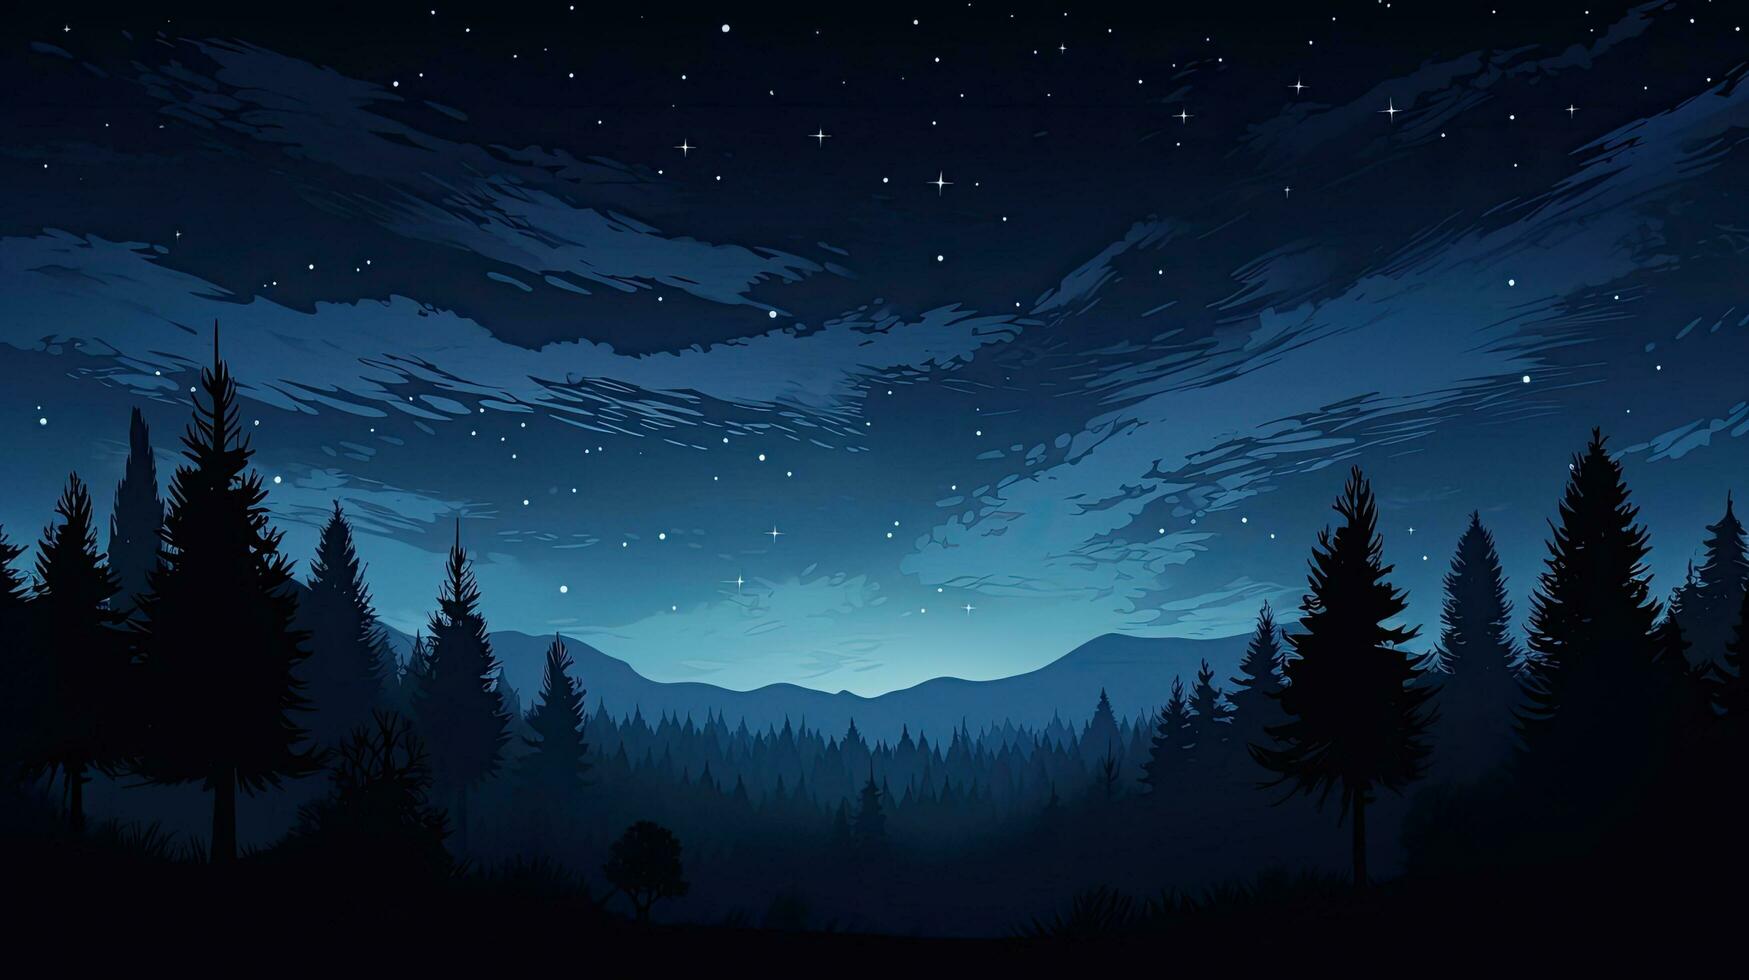 Moon shining above dark forest silhouette serene outdoor night scene photo